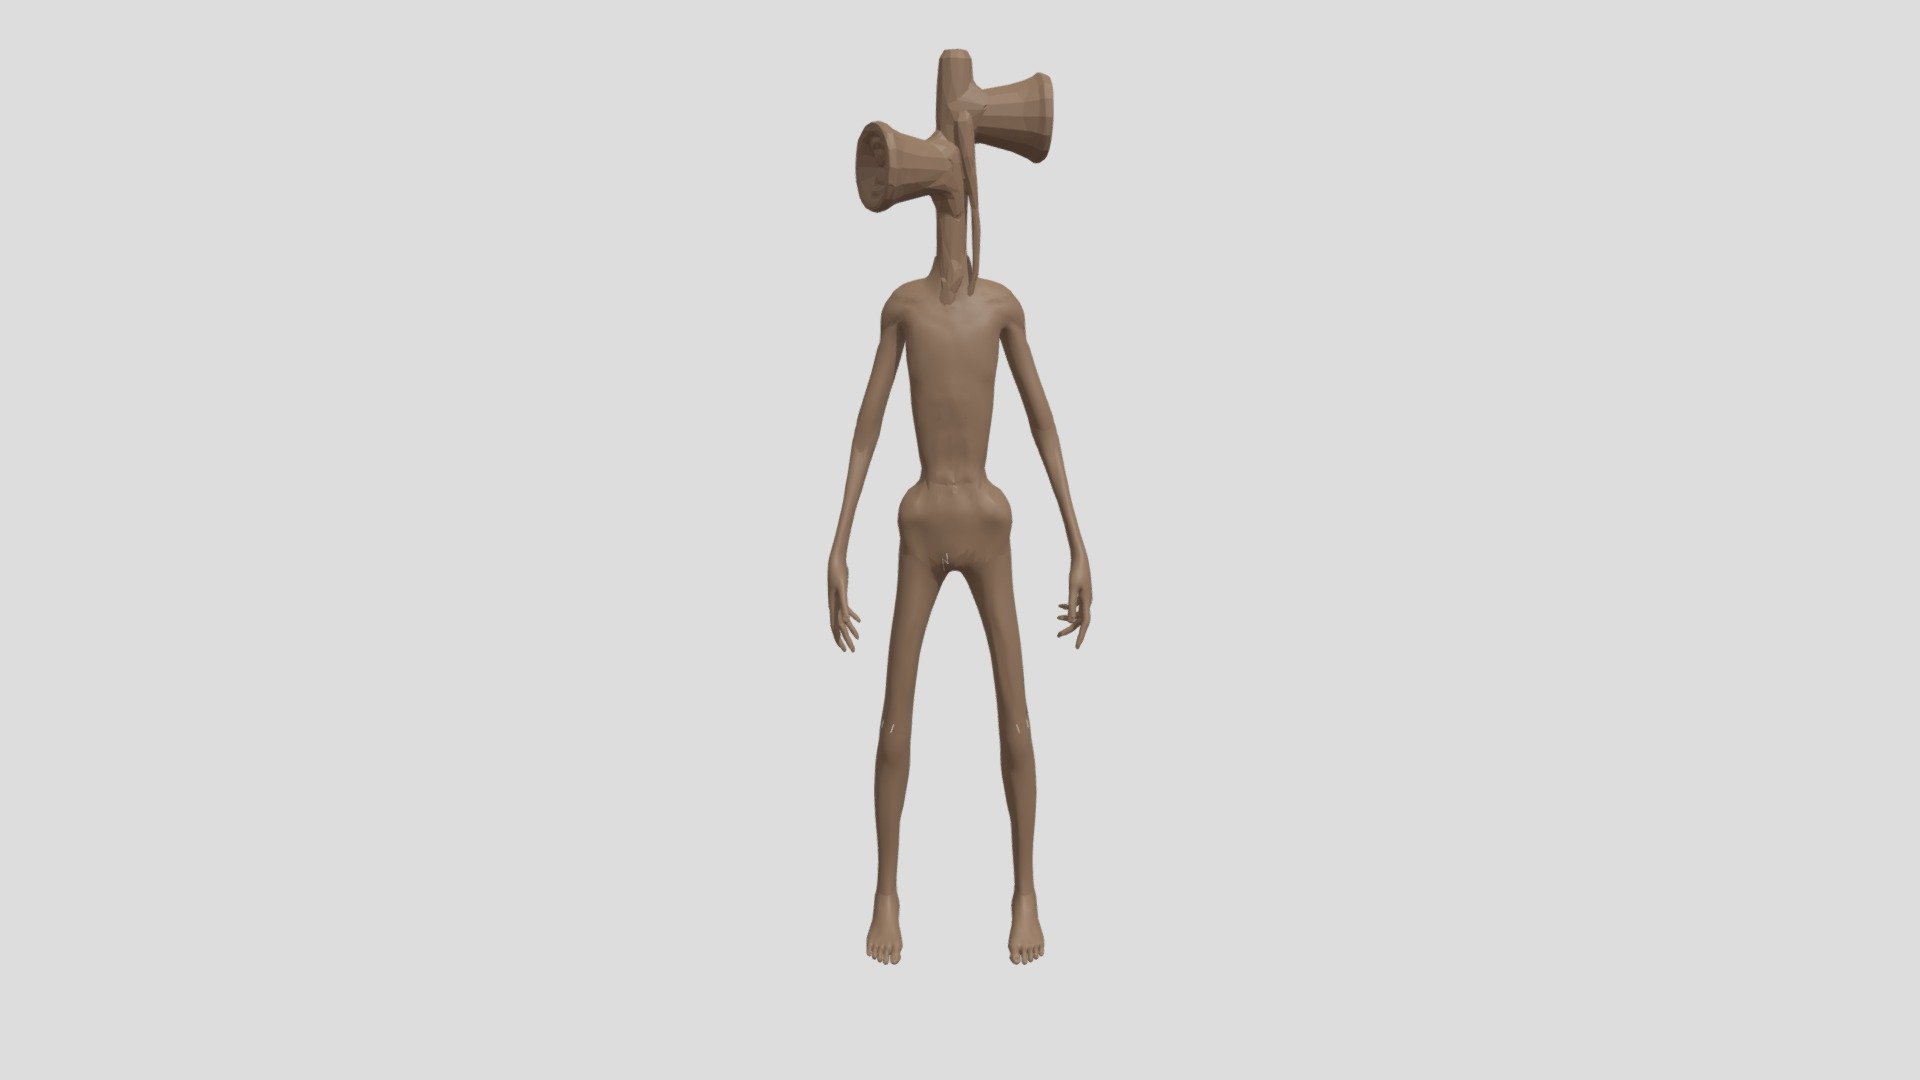 Siren-head 3D models - Sketchfab